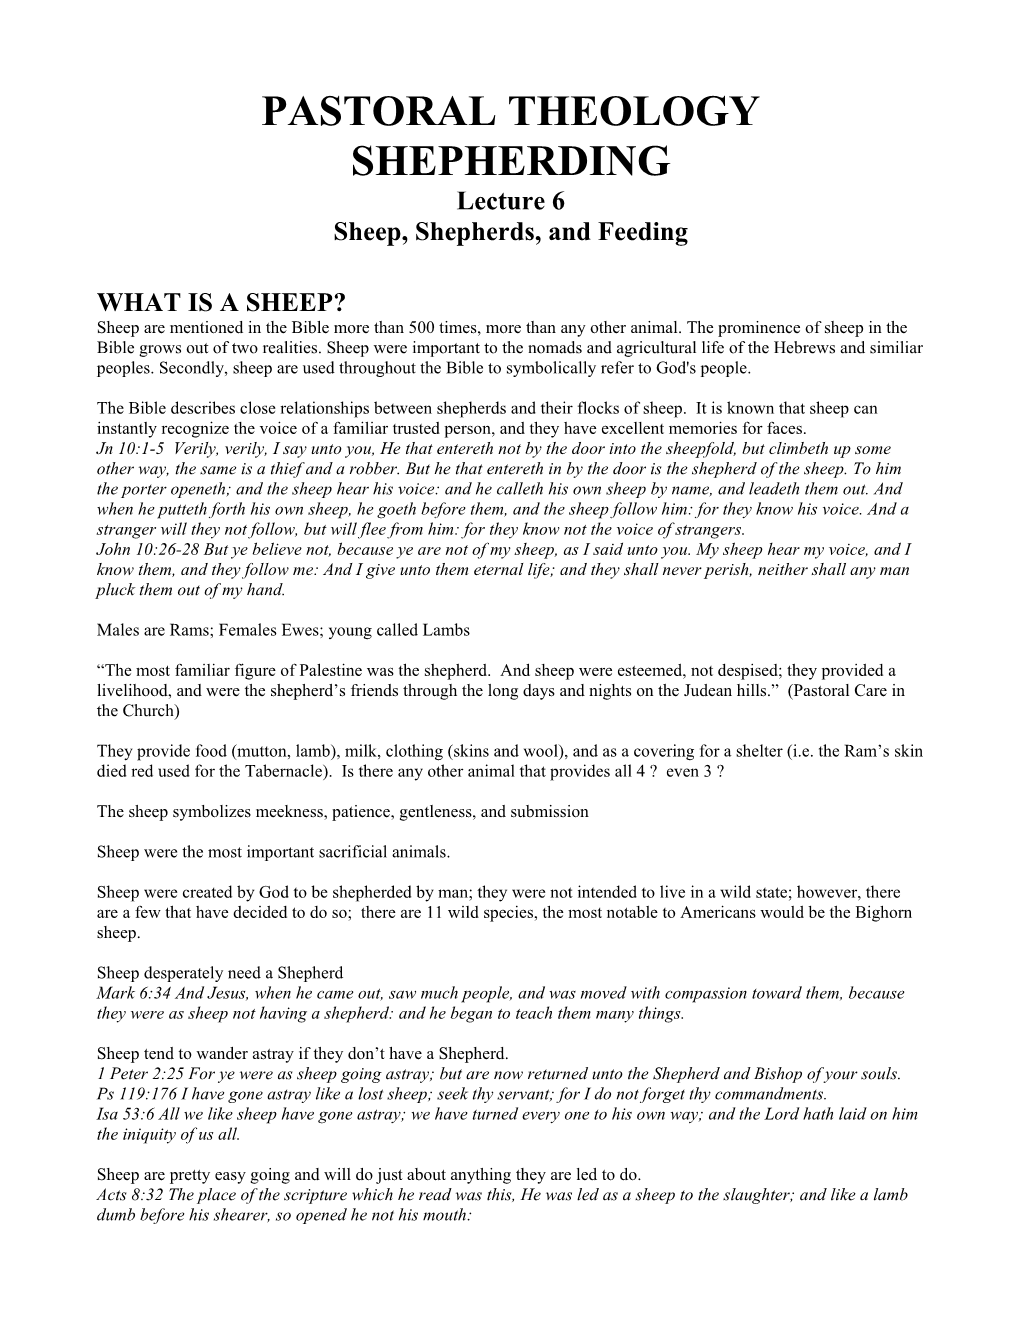 Sheep, Shepherds, and Feeding